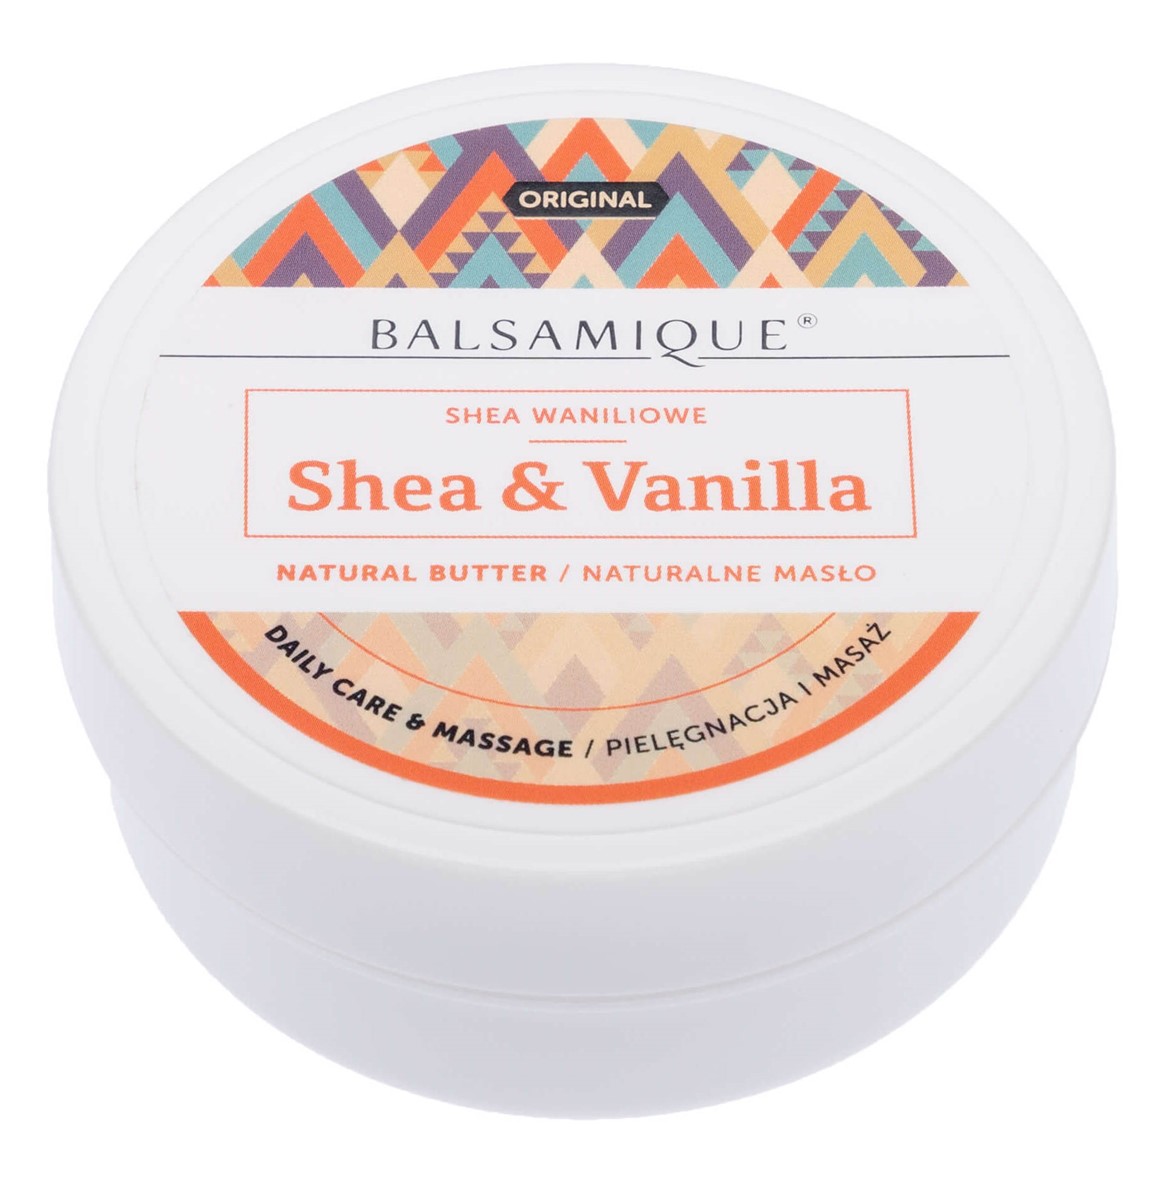 Naturalne masło Shea Waniliowe - Balsamique (80g)